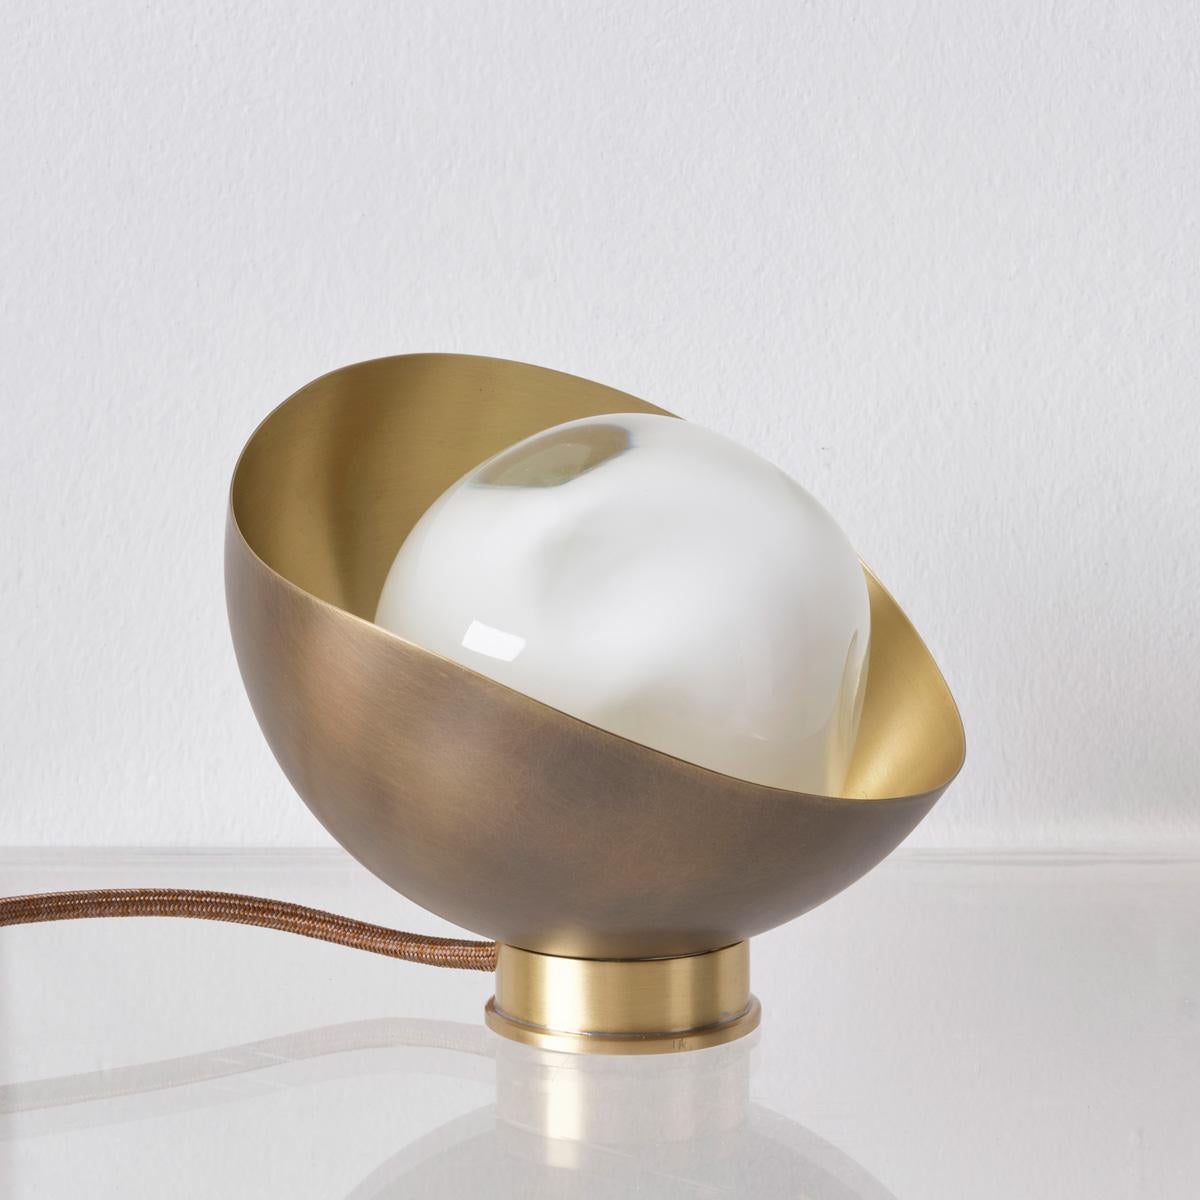 Italian Perla Mini Table Lamp by Gaspare Asaro. Sand White and Satin Brass Finish For Sale